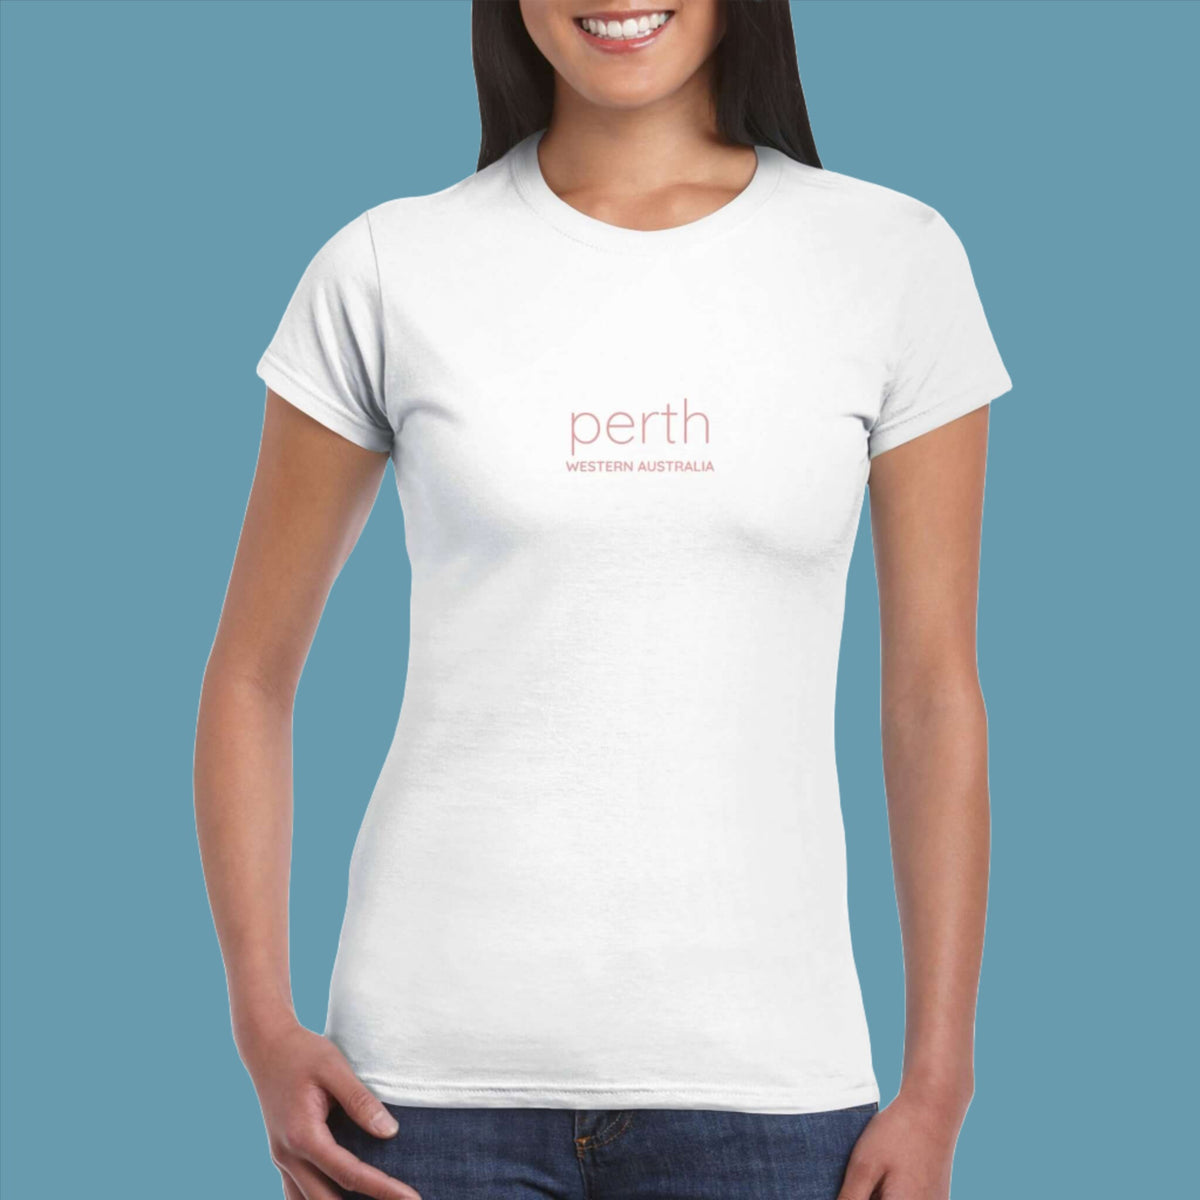 Womens Perth Western Australia white t shirt - MangoBap